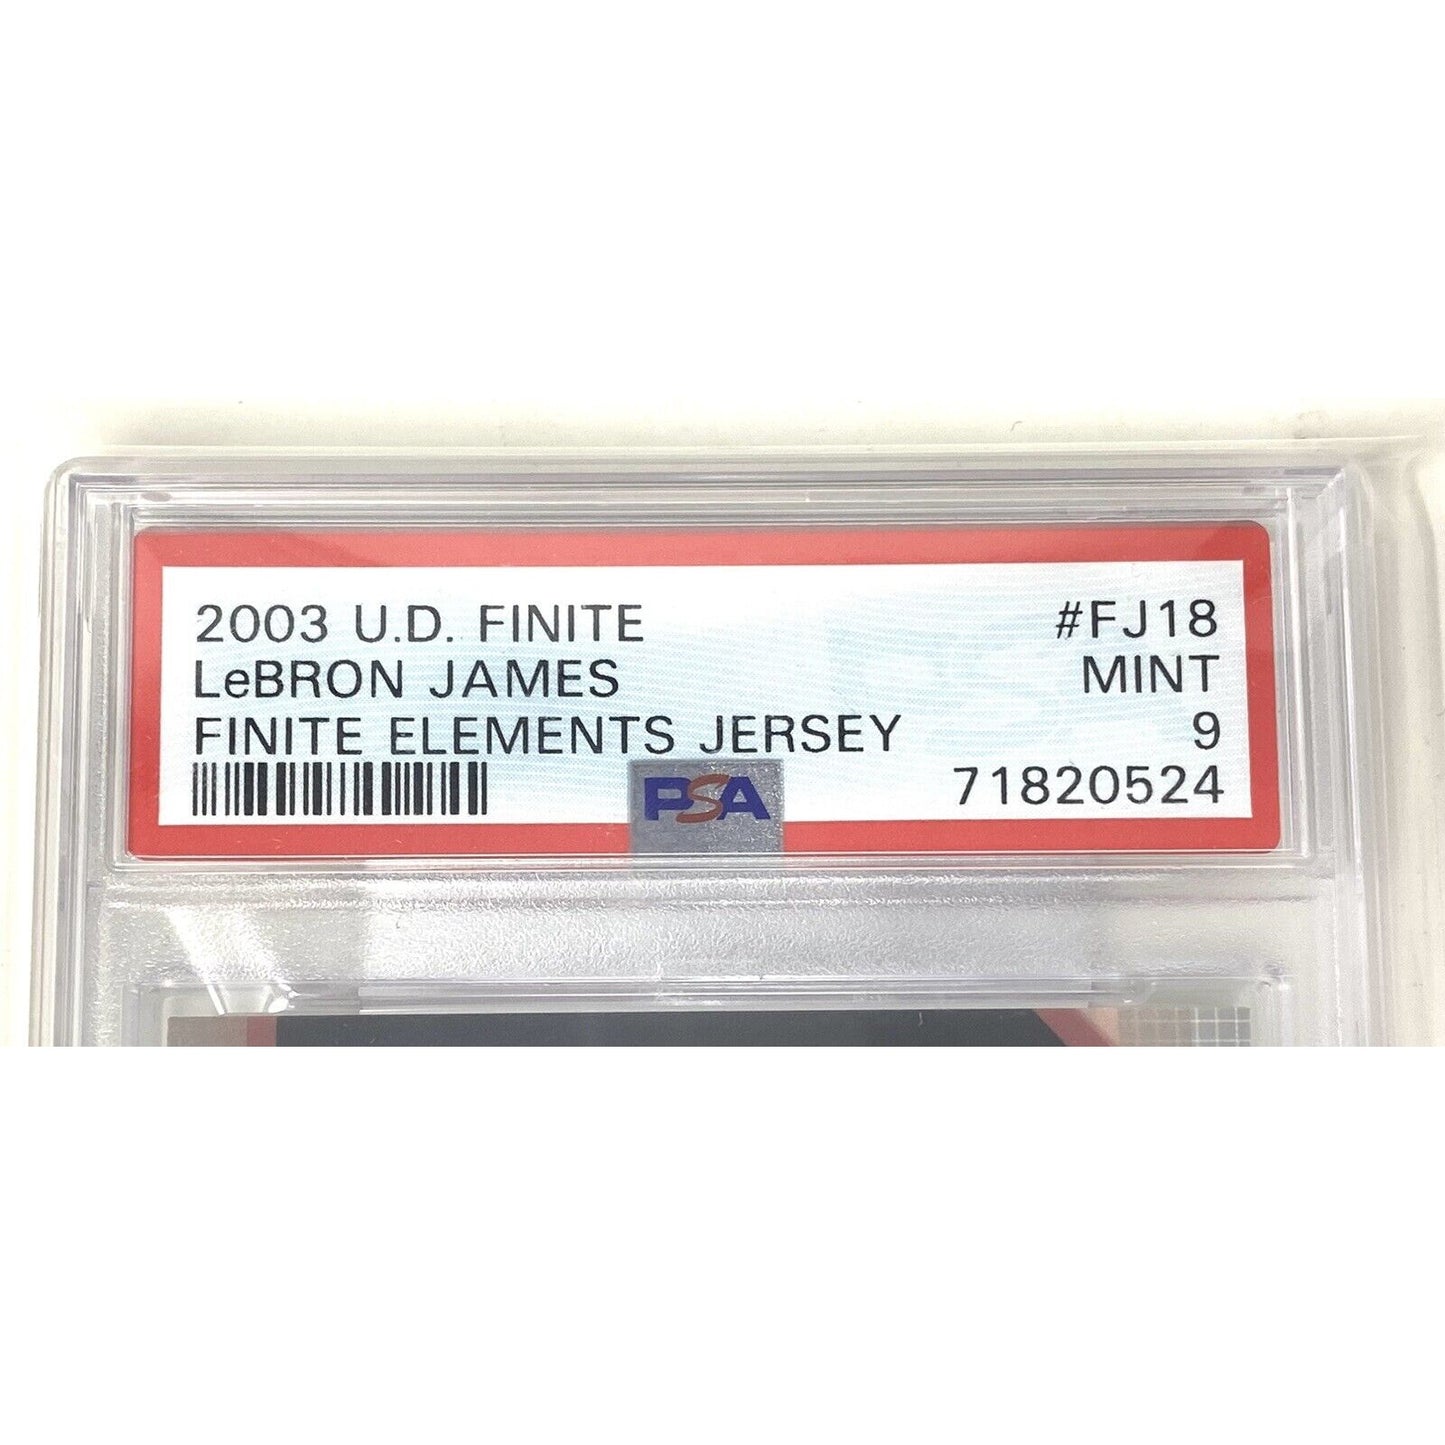 PSA 9 - 2003 U.D. Finite #FJ18 LeBron James Finite Elements Jersey Card